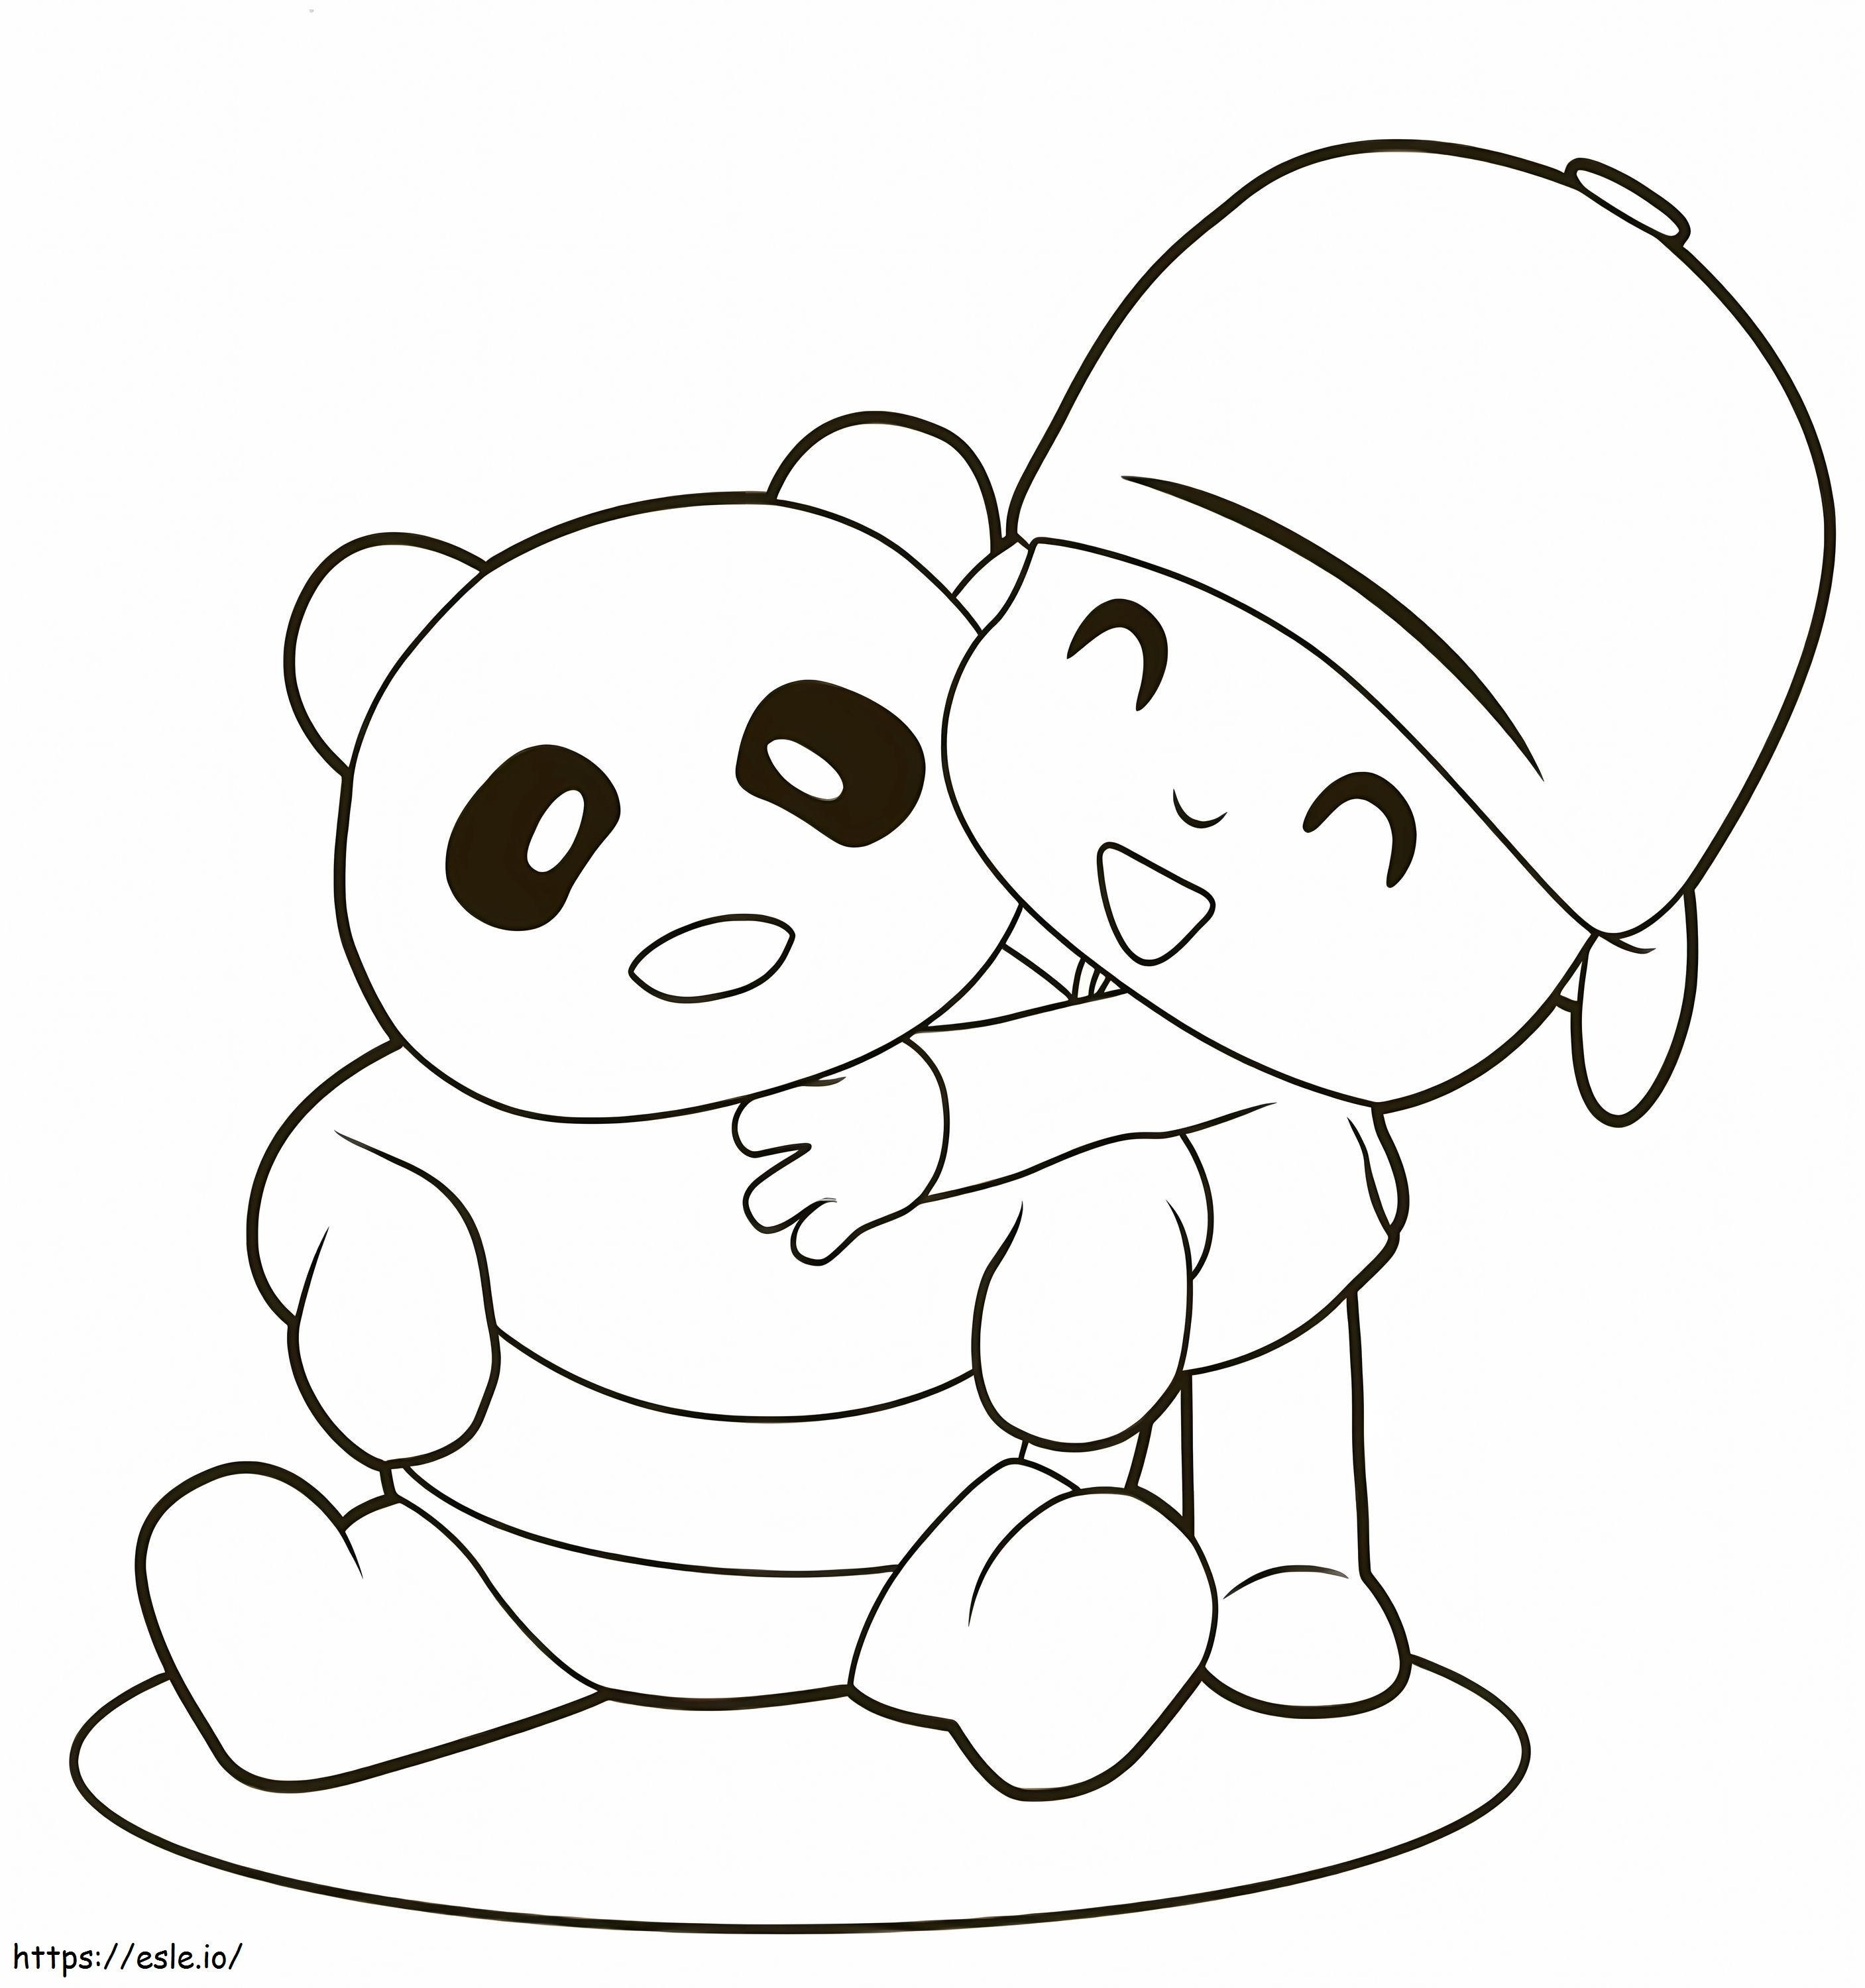 Pocoyo Hugging Panda coloring page